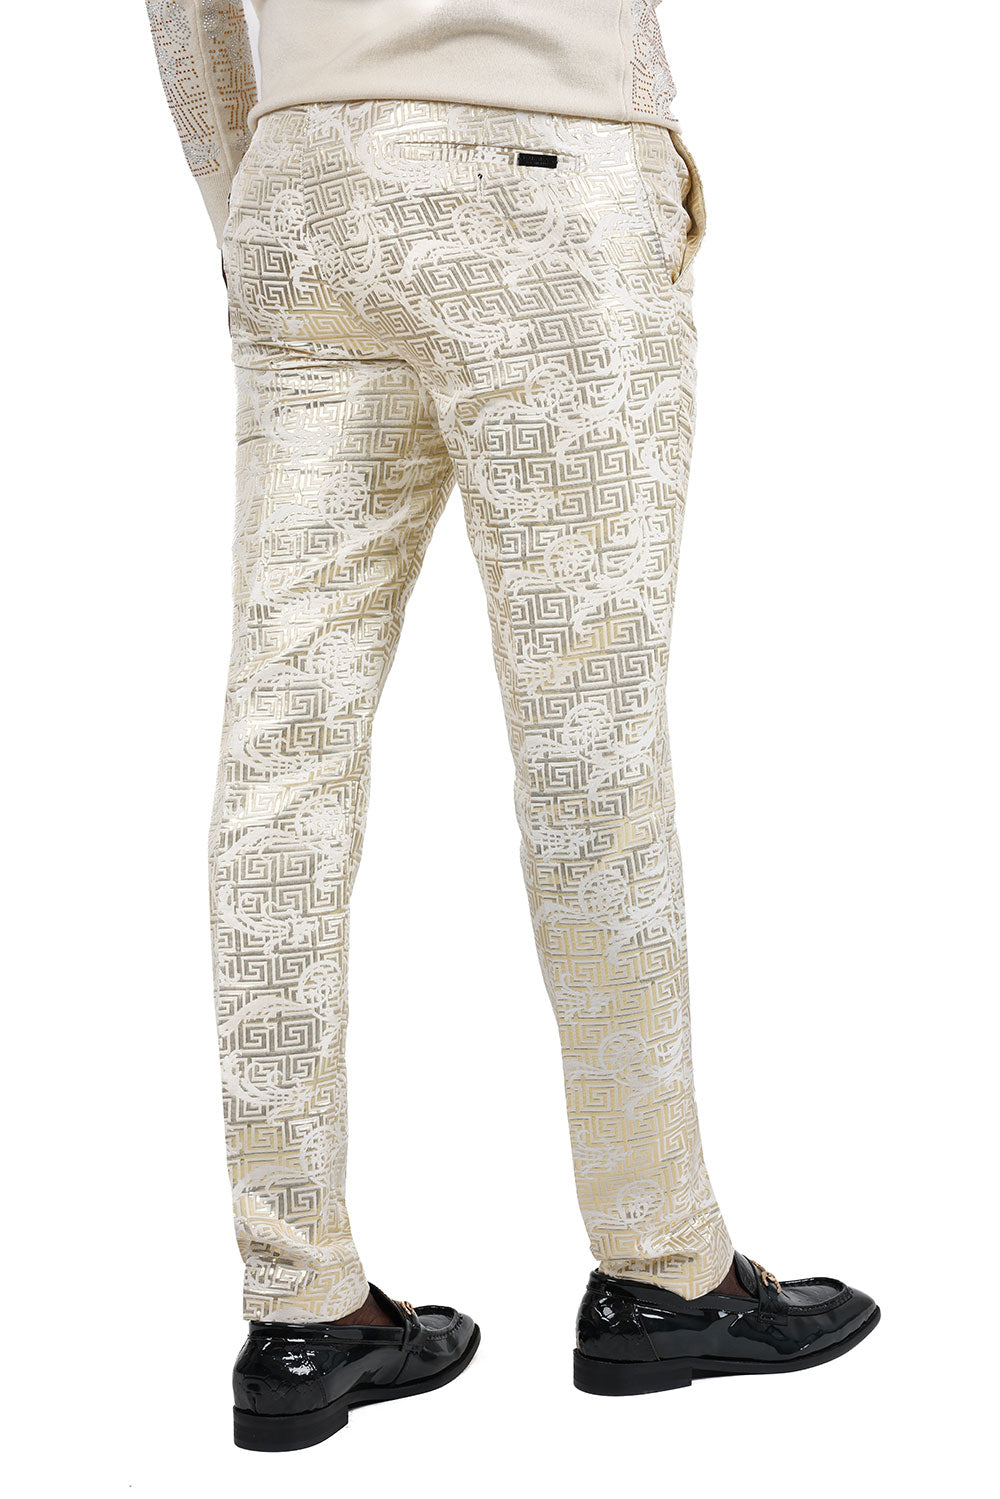 Barabas Men's Shiny Greek Fret Prints Design Chino Pants 2CP3102 Gold Cream